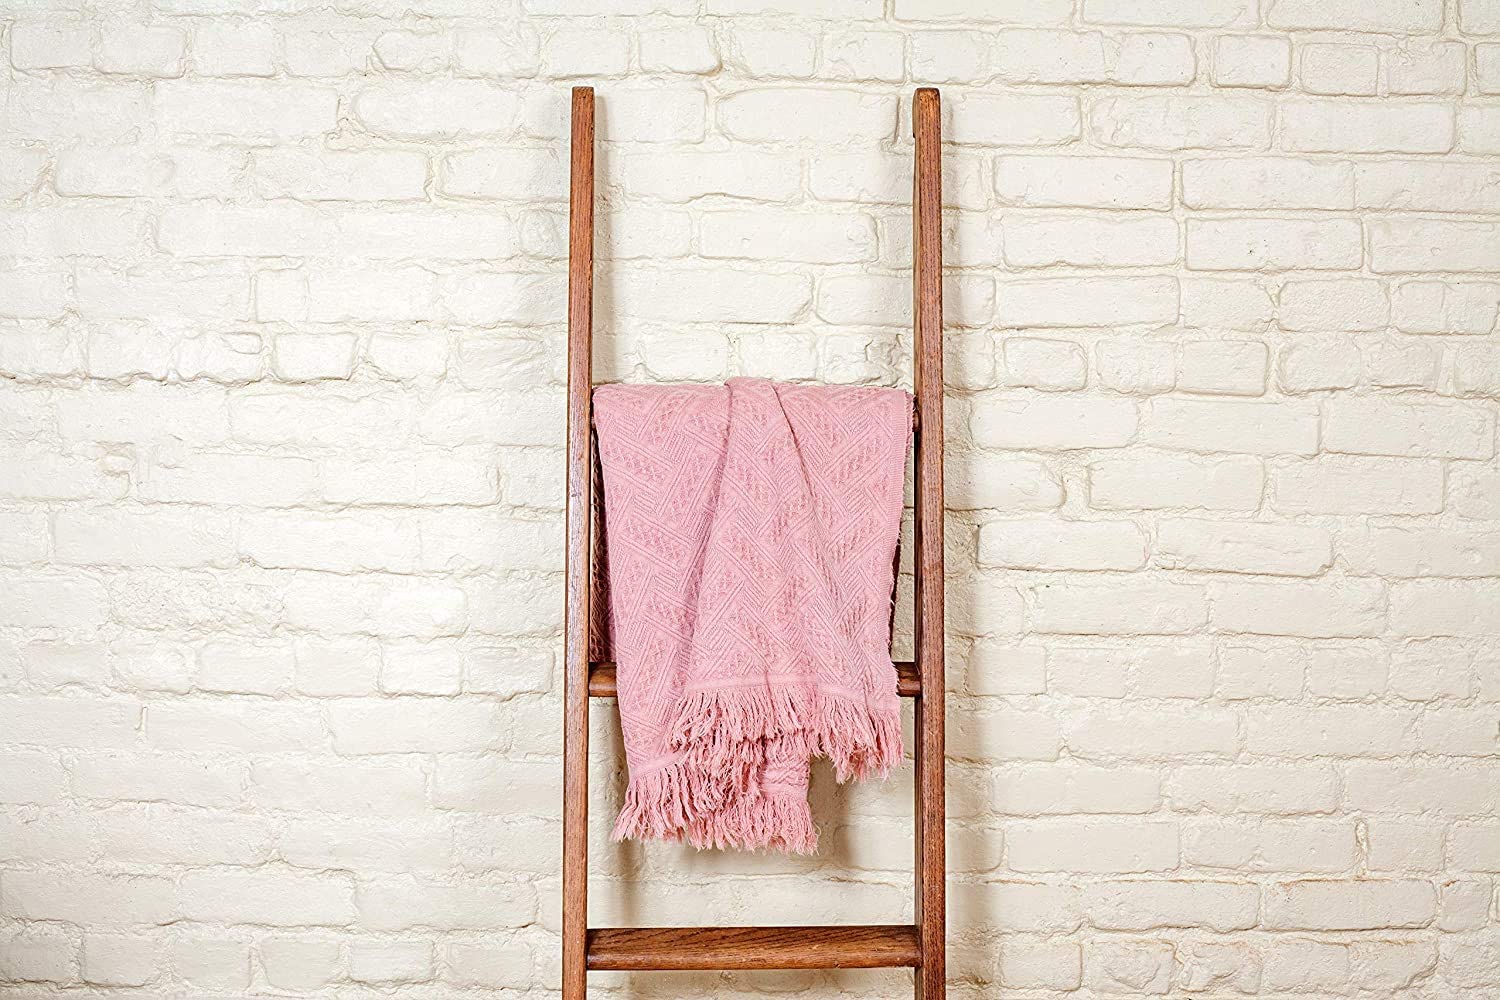 100% Cotton Throw Blankets Soft Lightweight Fall Spring